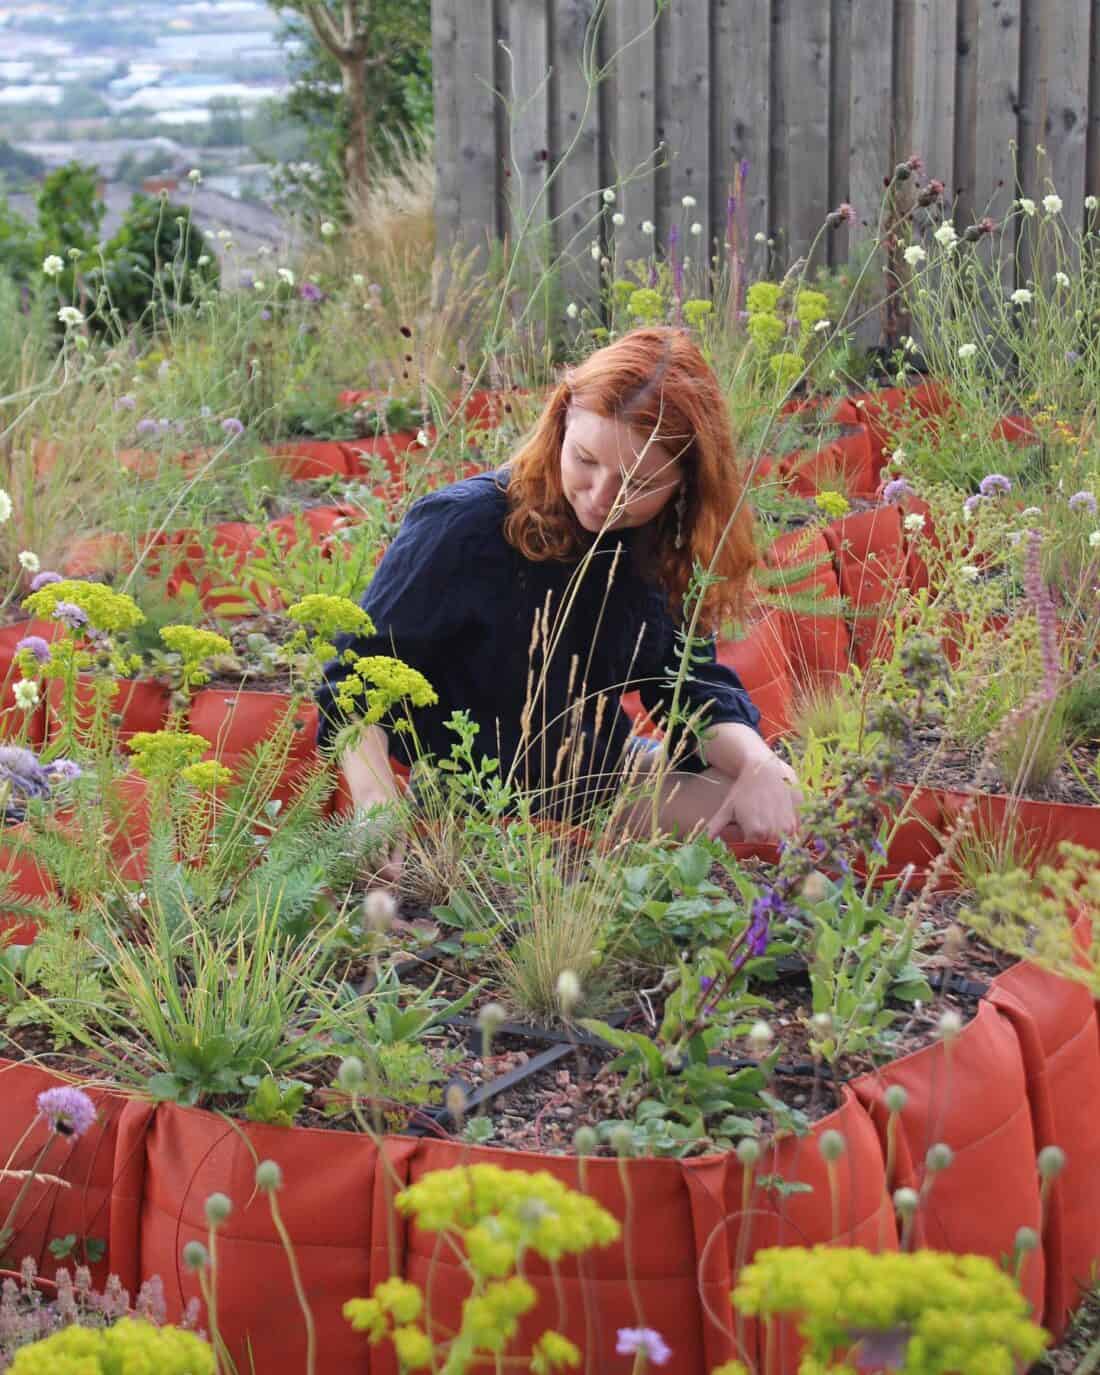 Woman tending to garden plants in raised beds.